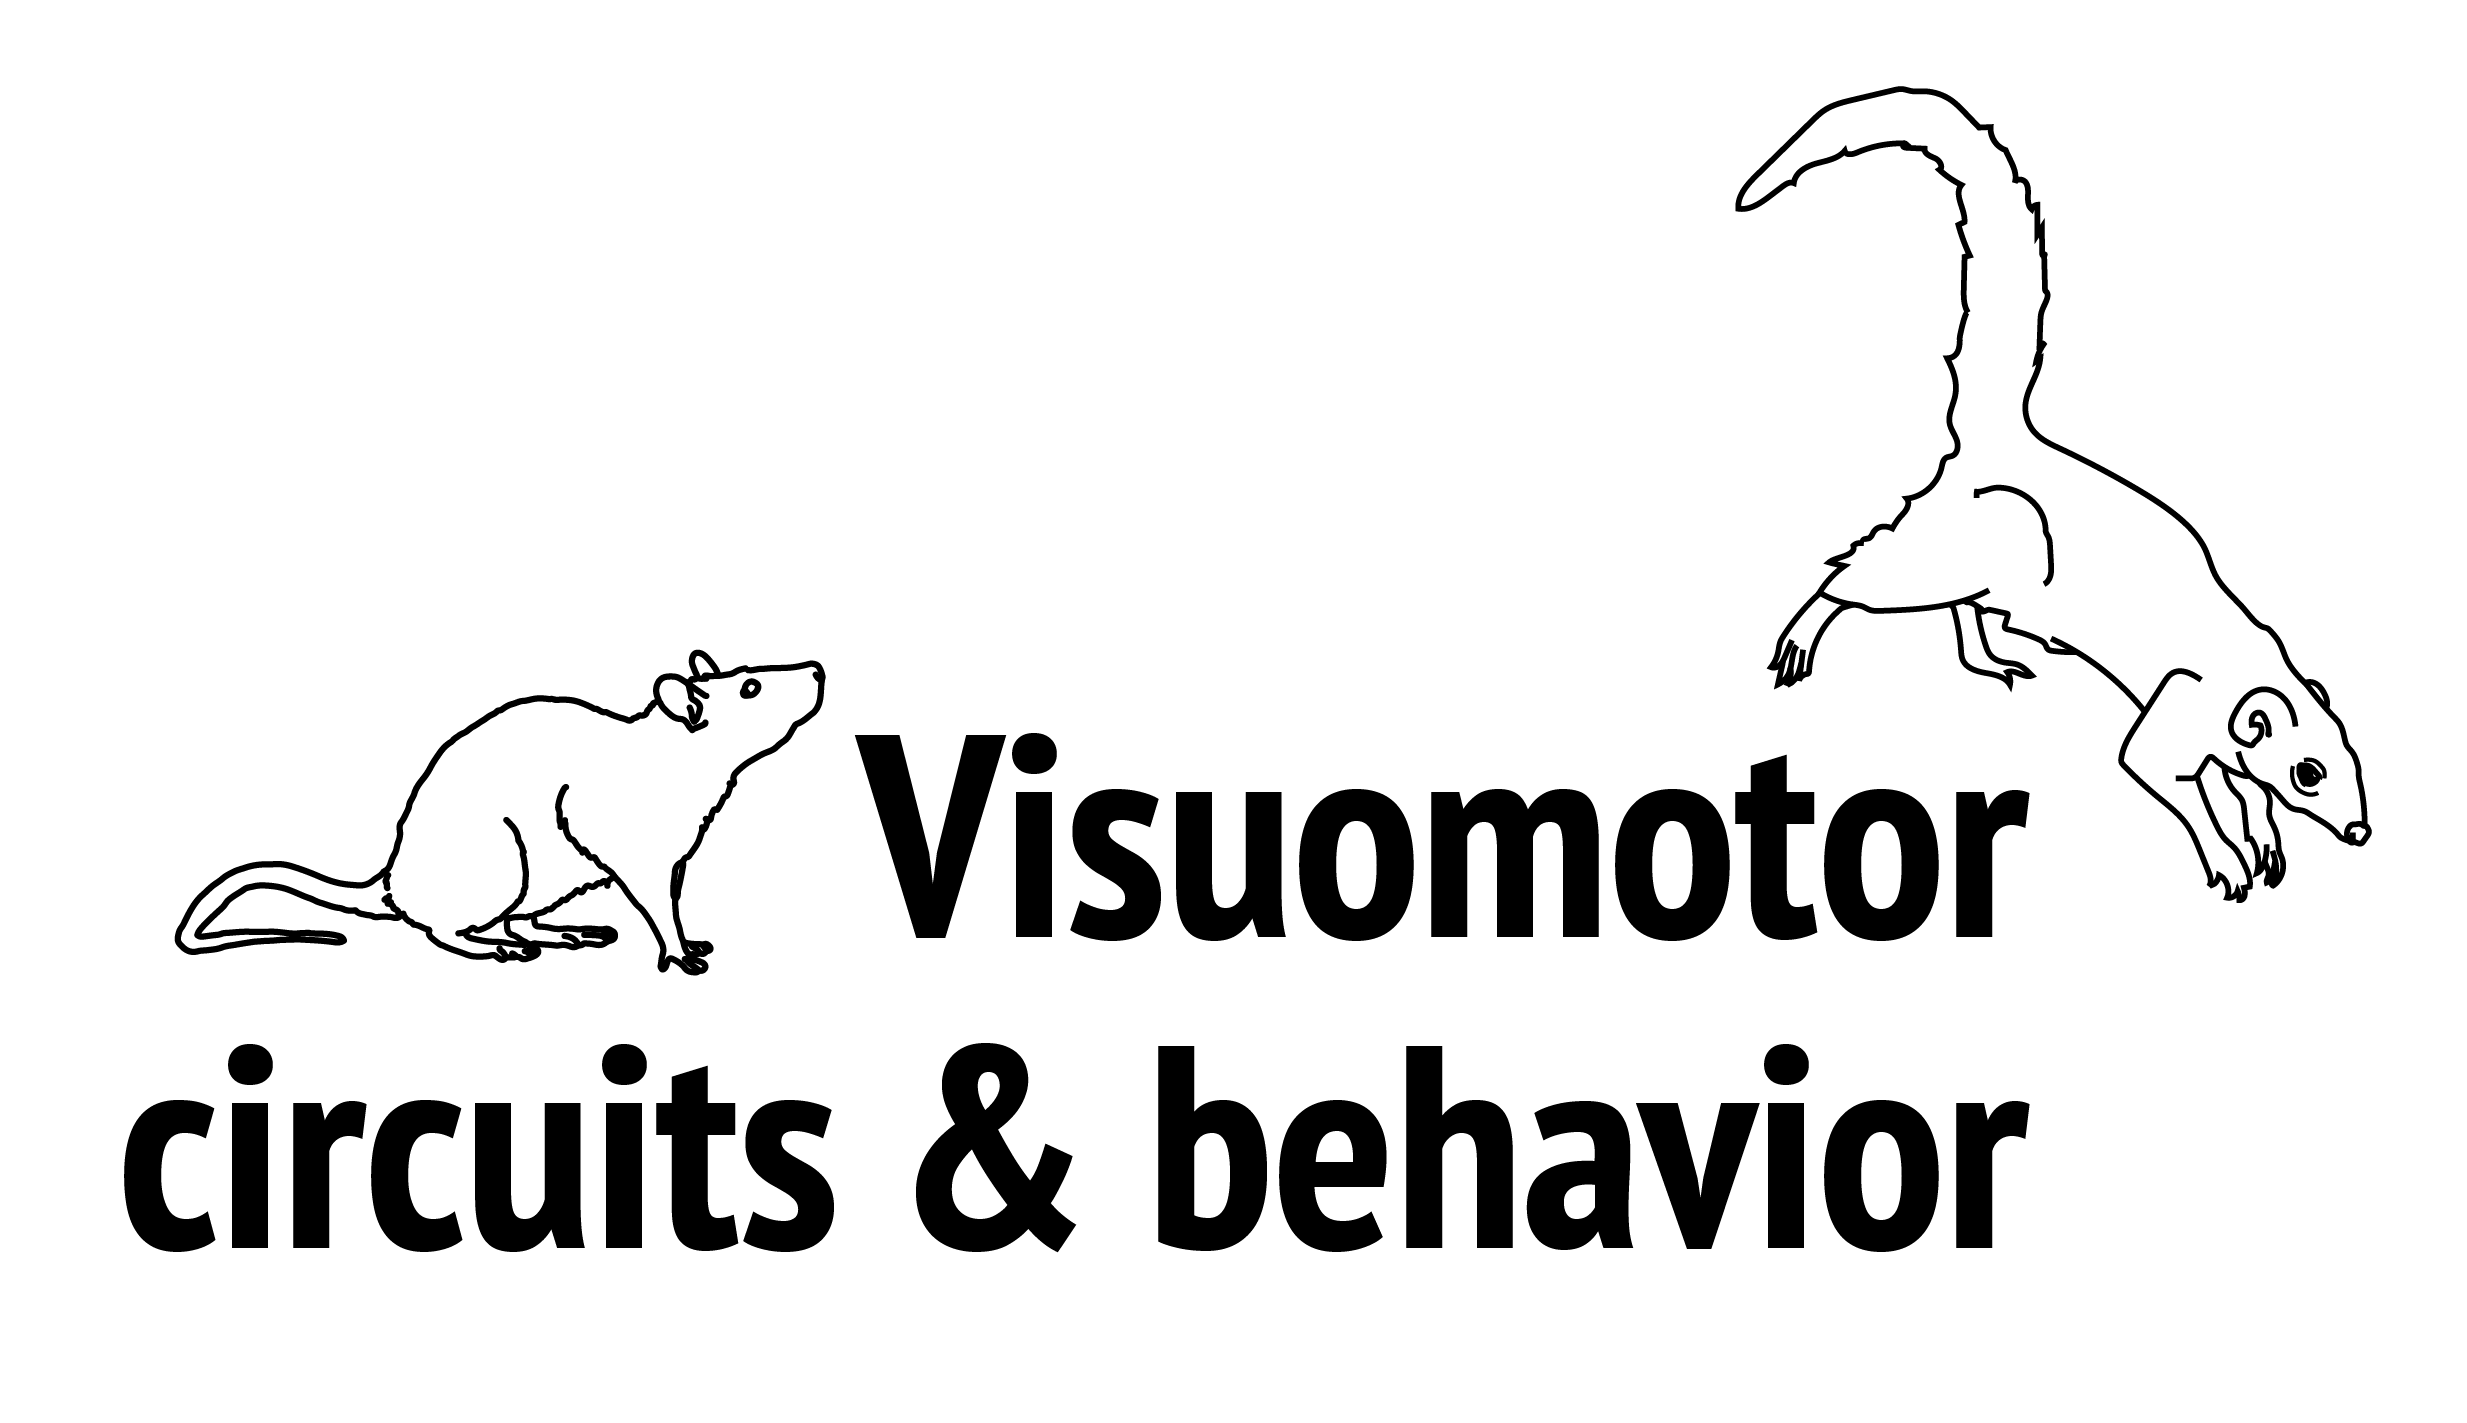 Visuomotor circuits &amp; behavior logo with a rat and jumping tree shrew